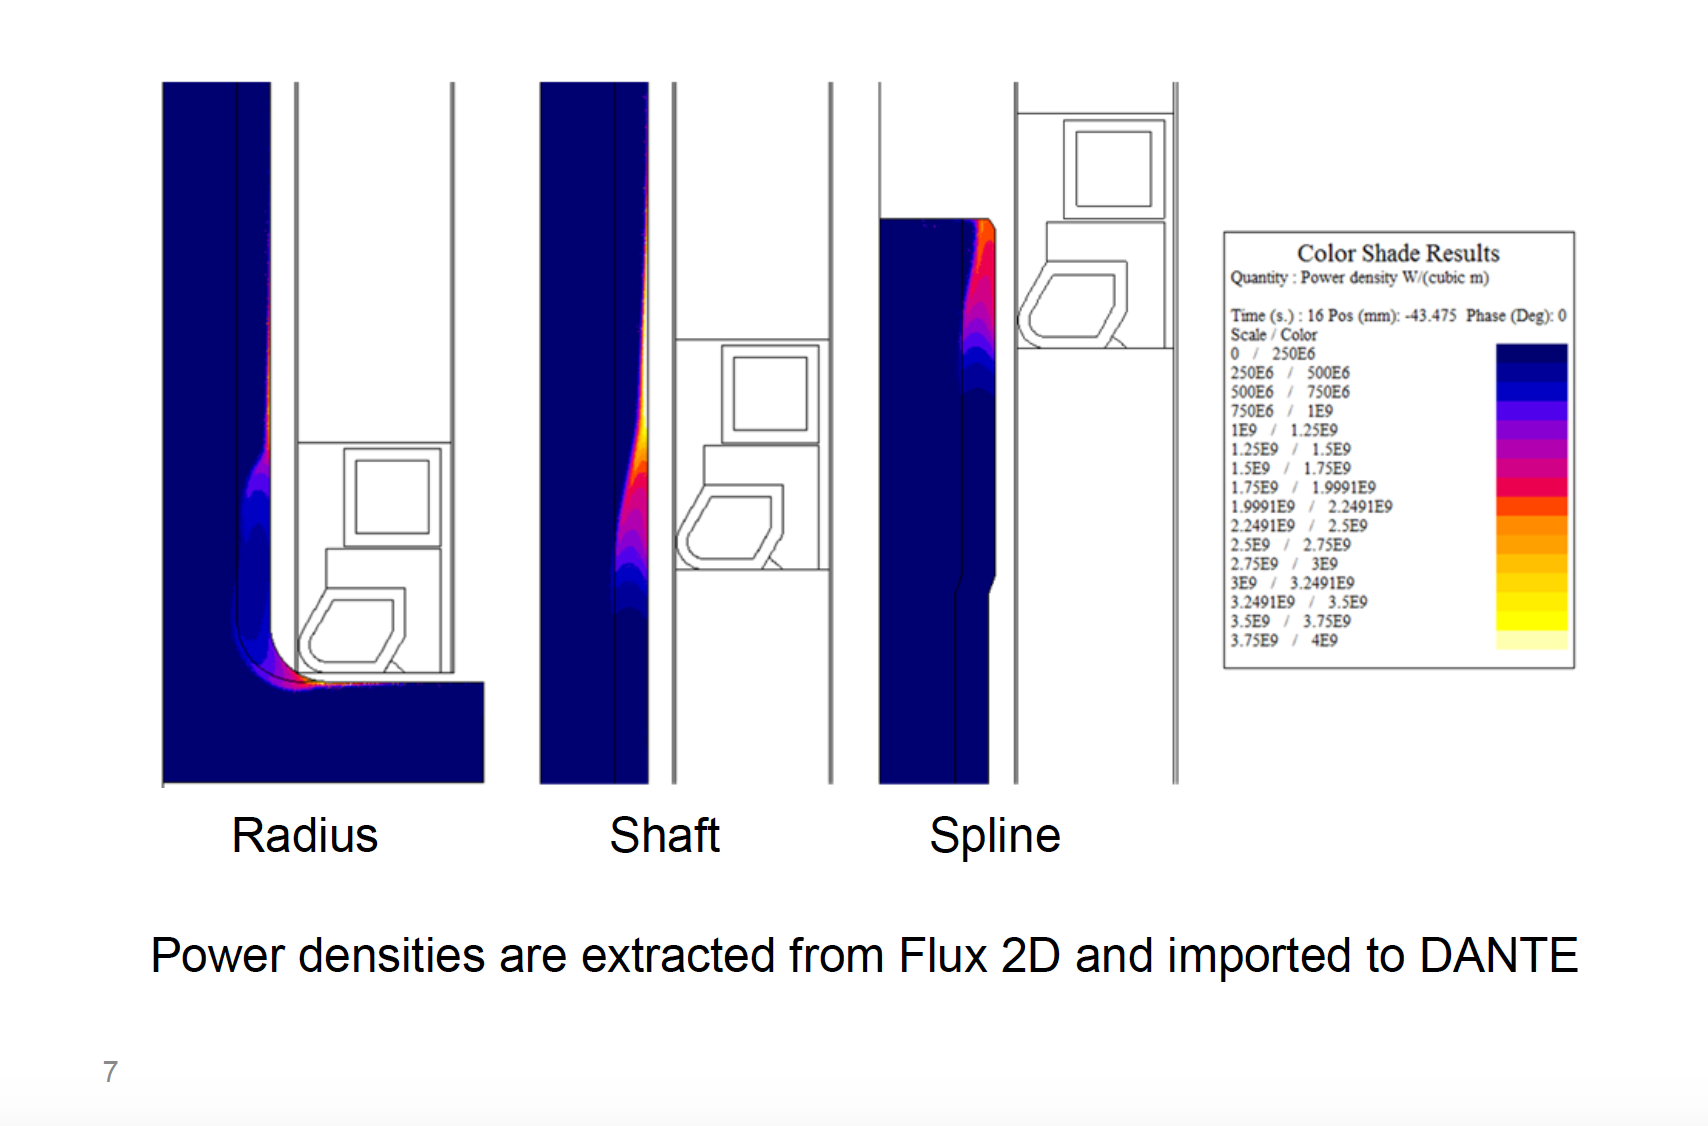 Fluxtrol | Integrated Computational Development of Induction Heat Treatment Process for Automotive Axle Shafts Figure 6 - Power Density in 3 Regions (Flux 2D)